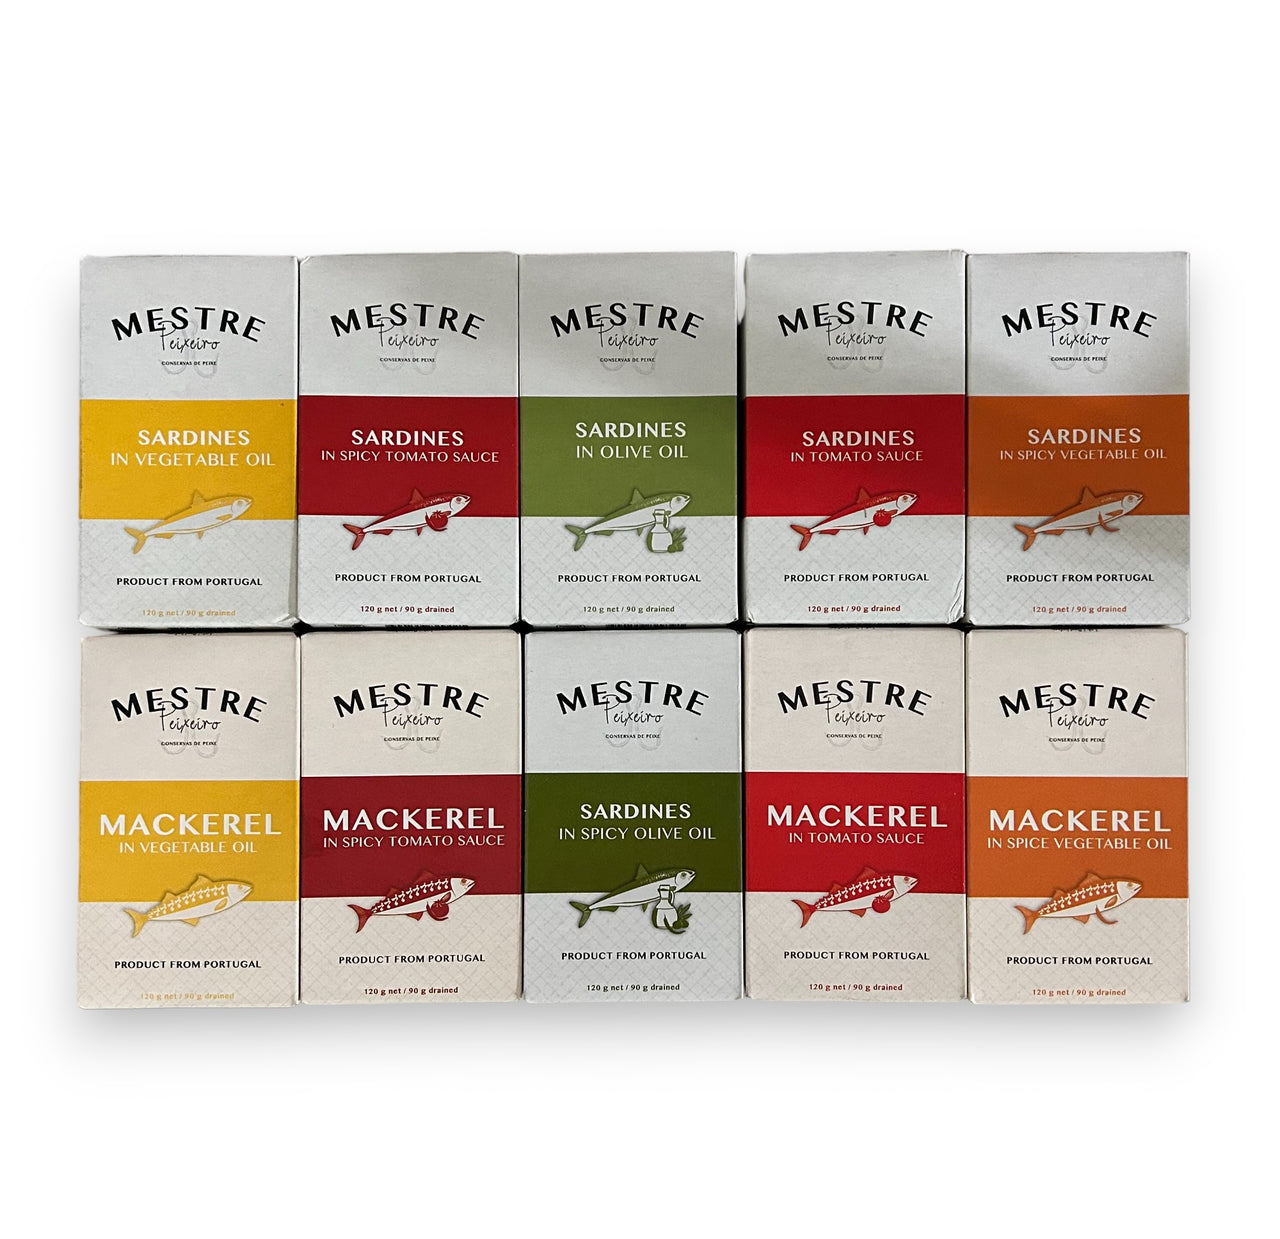 Mestre Sardines and Mackerel Variety Pack - 10 Pack